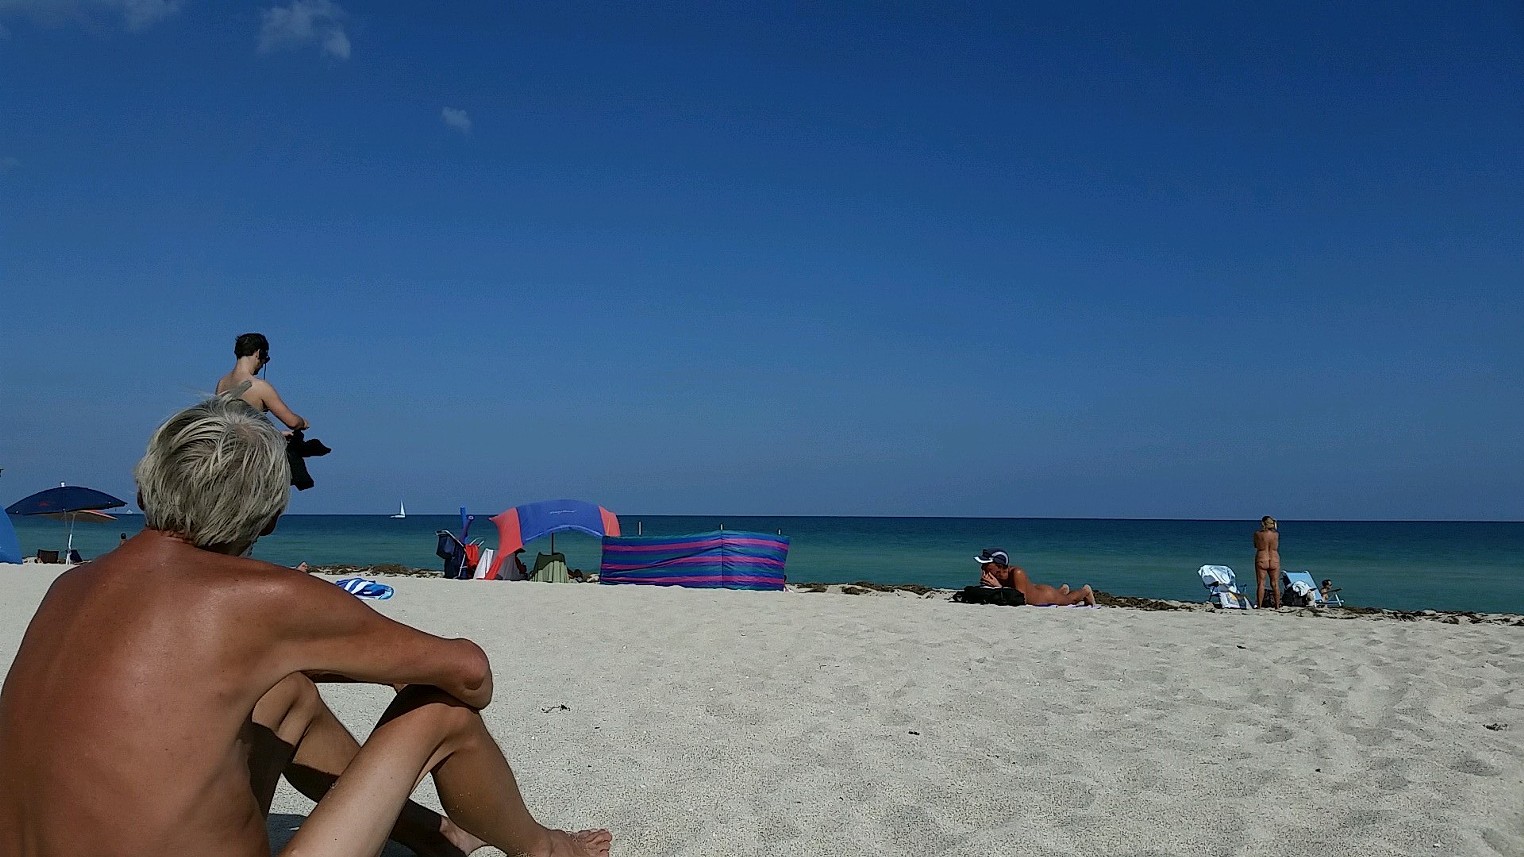 christopher olander recommends miami nude beach pics pic